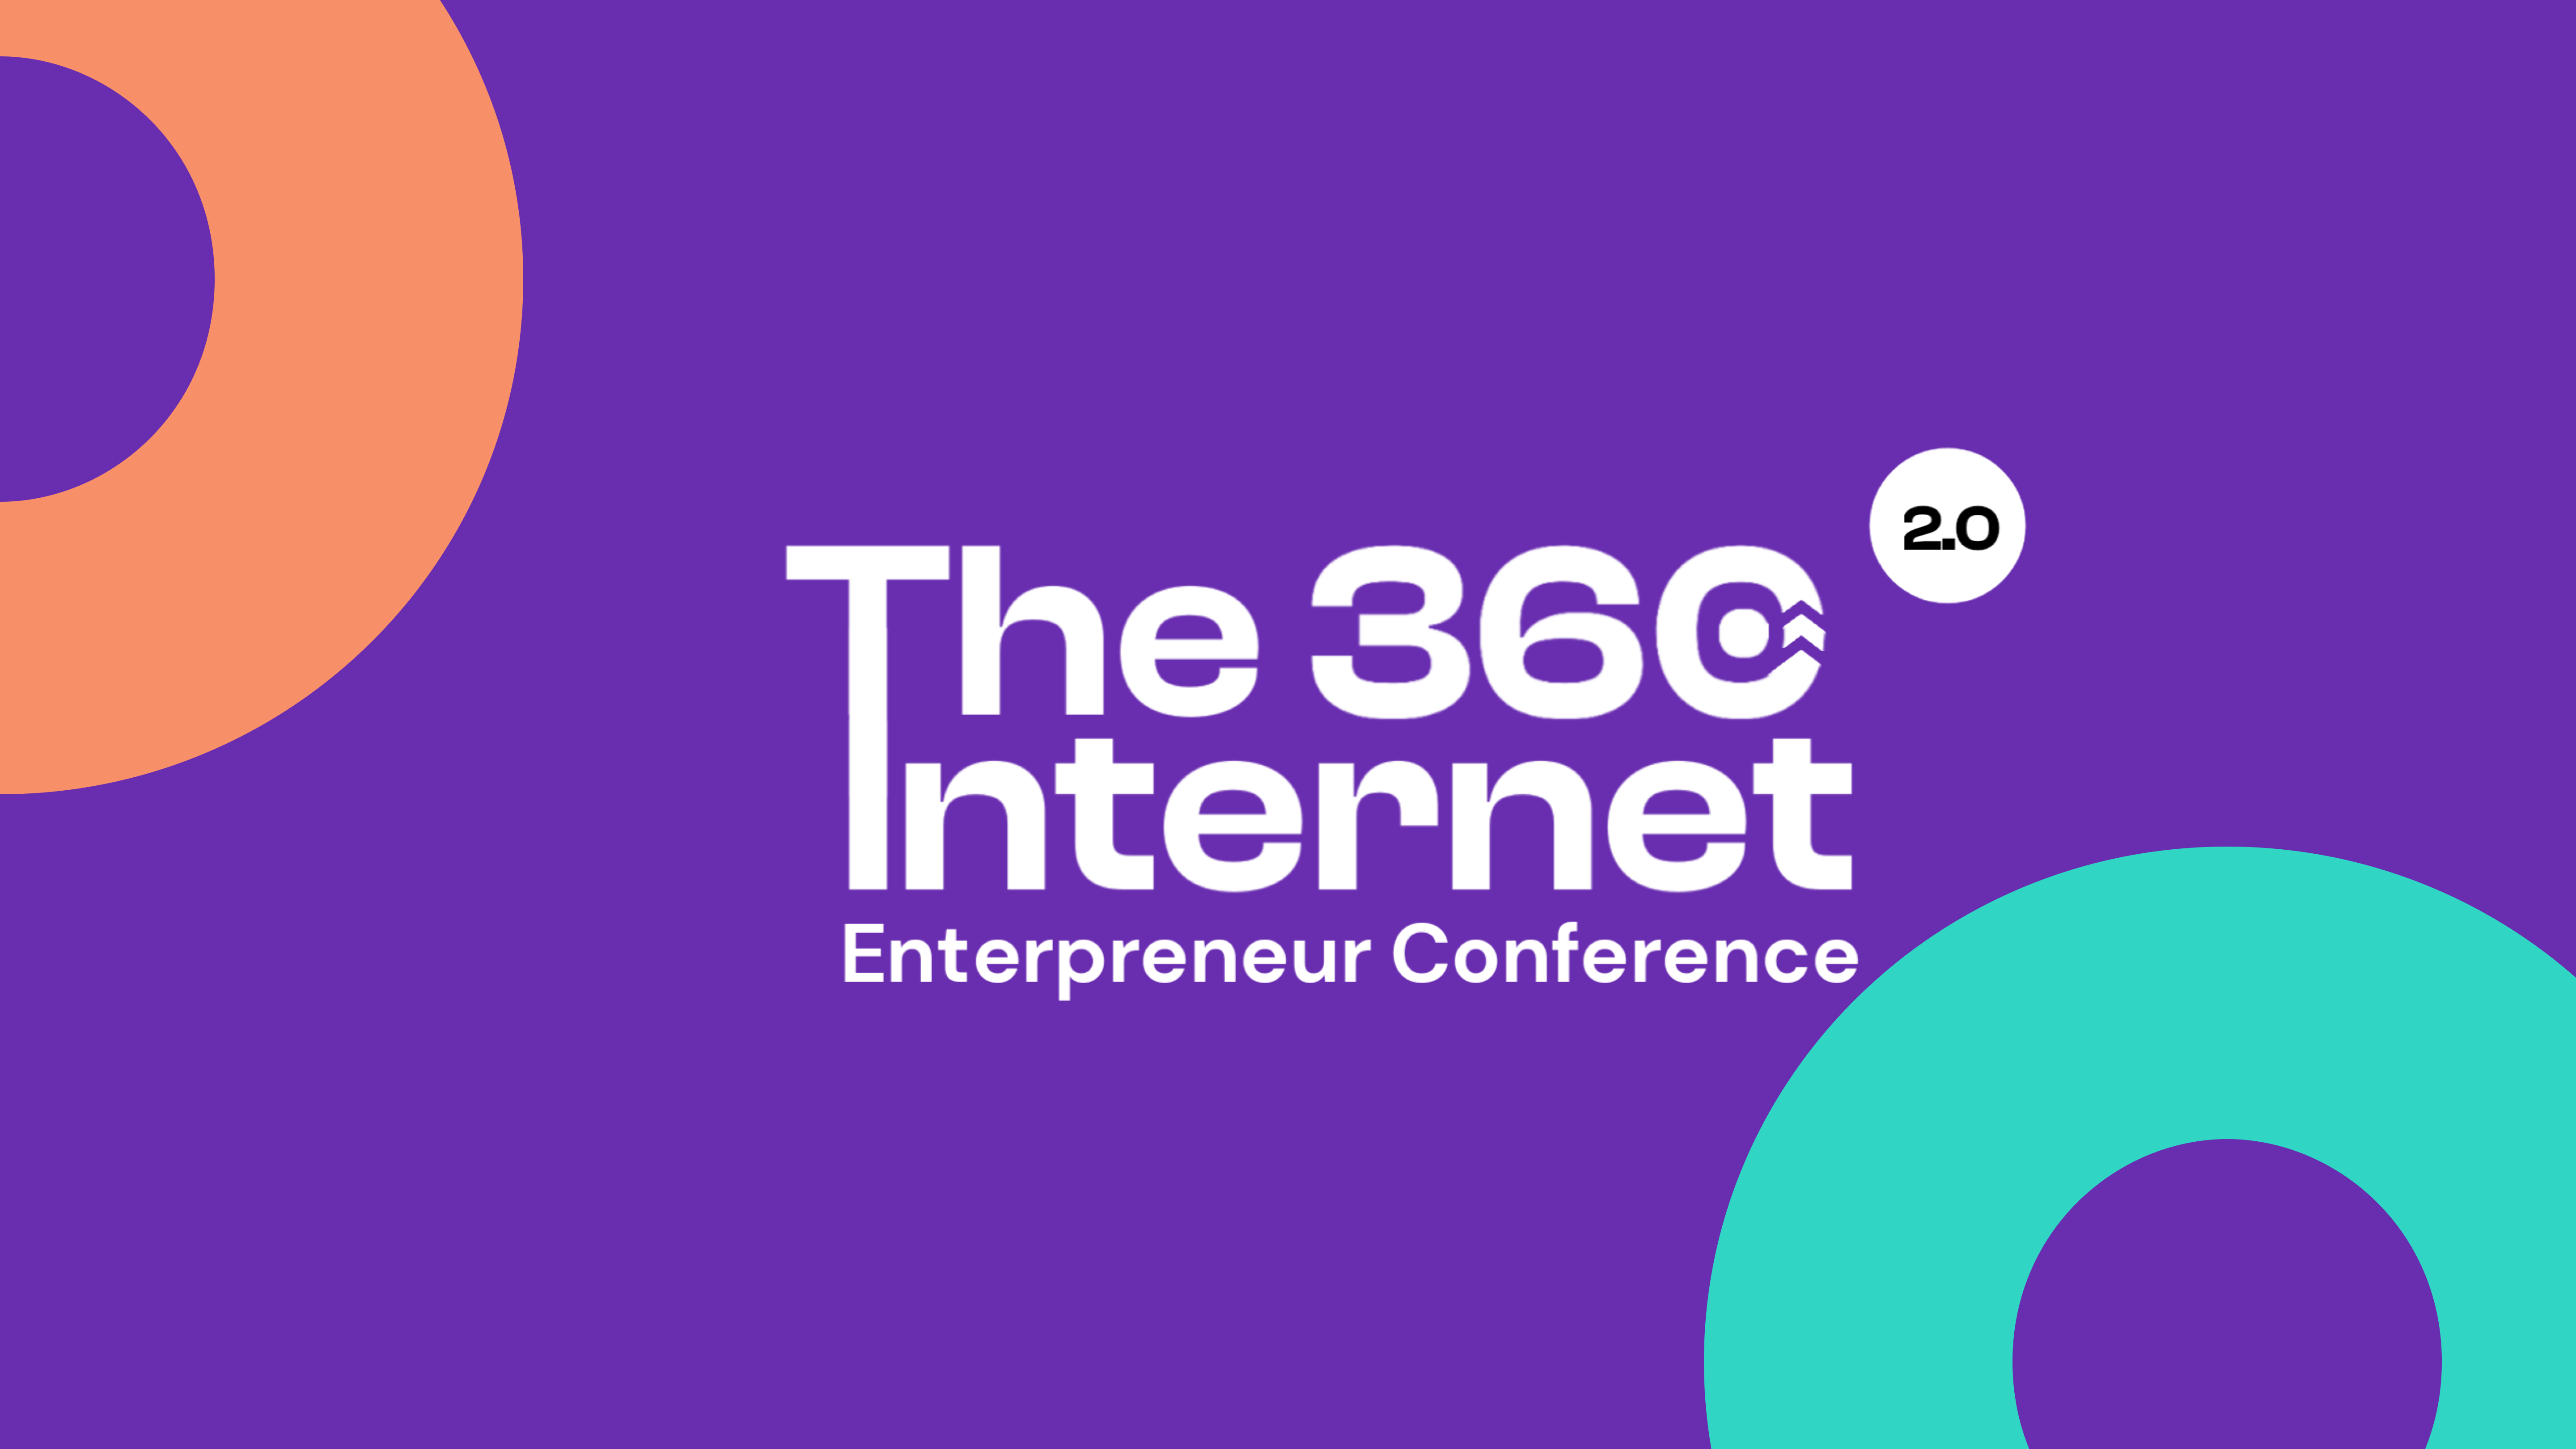 The 360 Internet Entrepreneur Conference 2.0